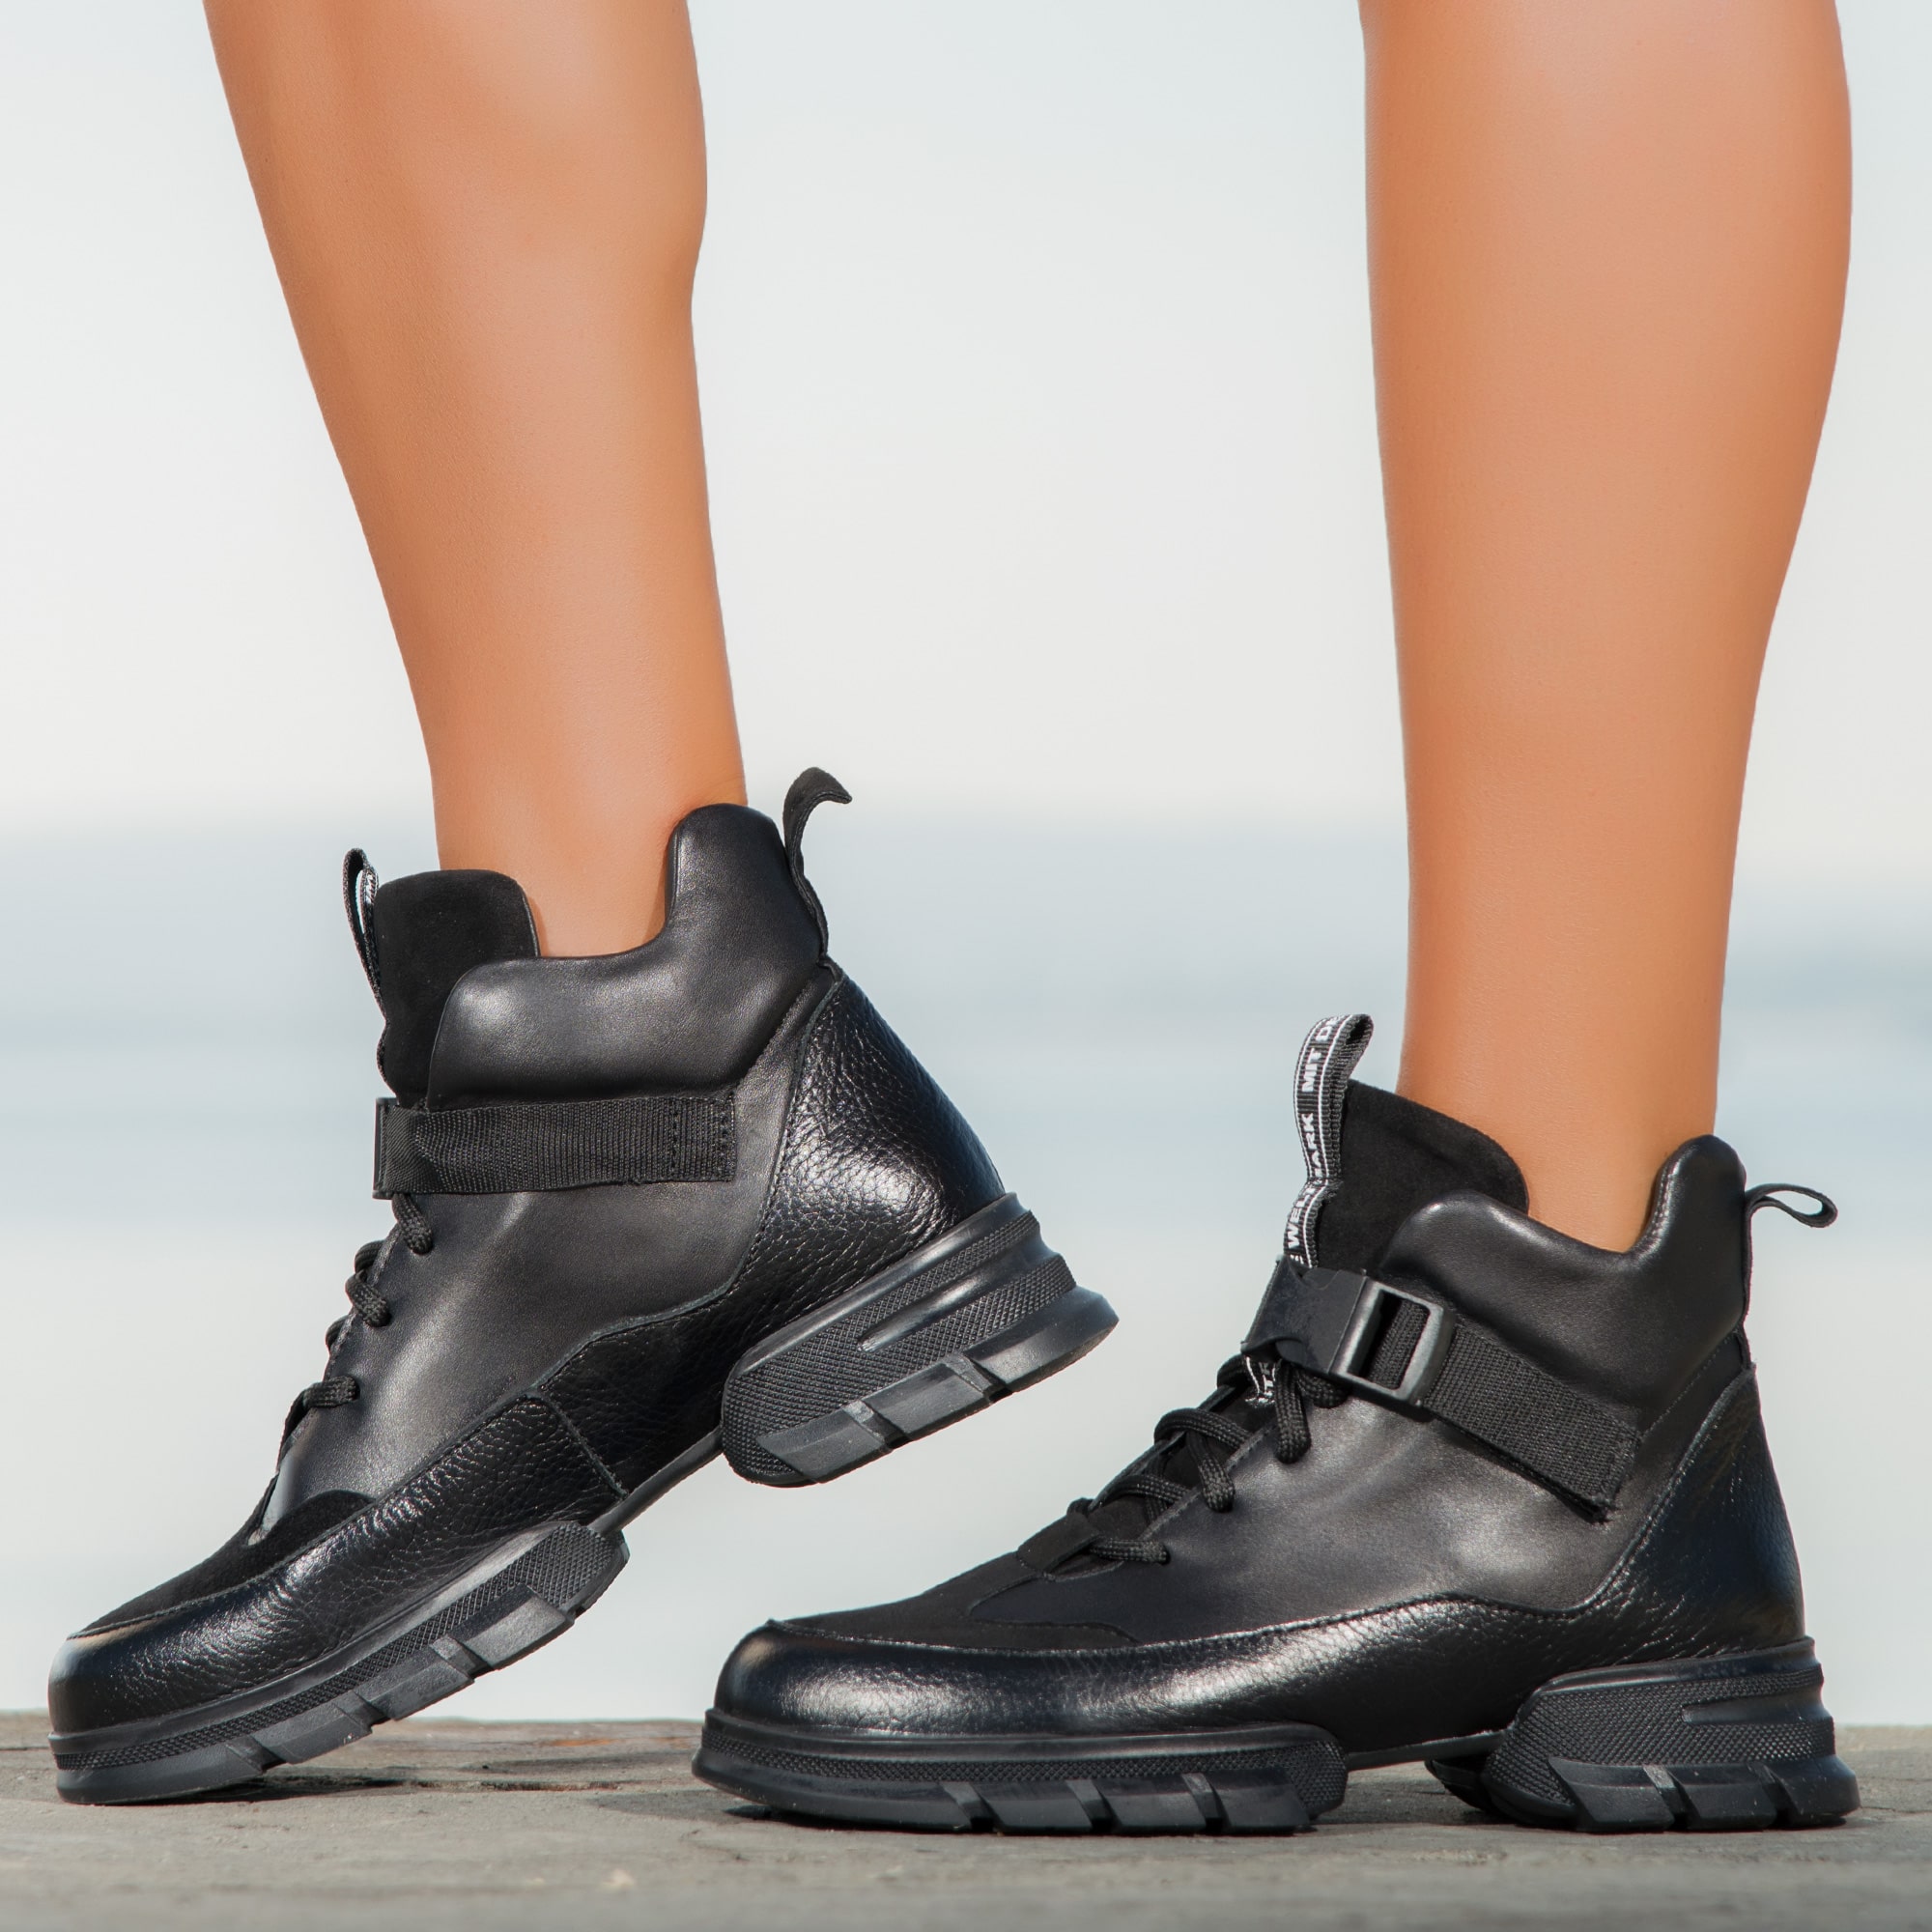 Activate Ankle Boots, Black Color